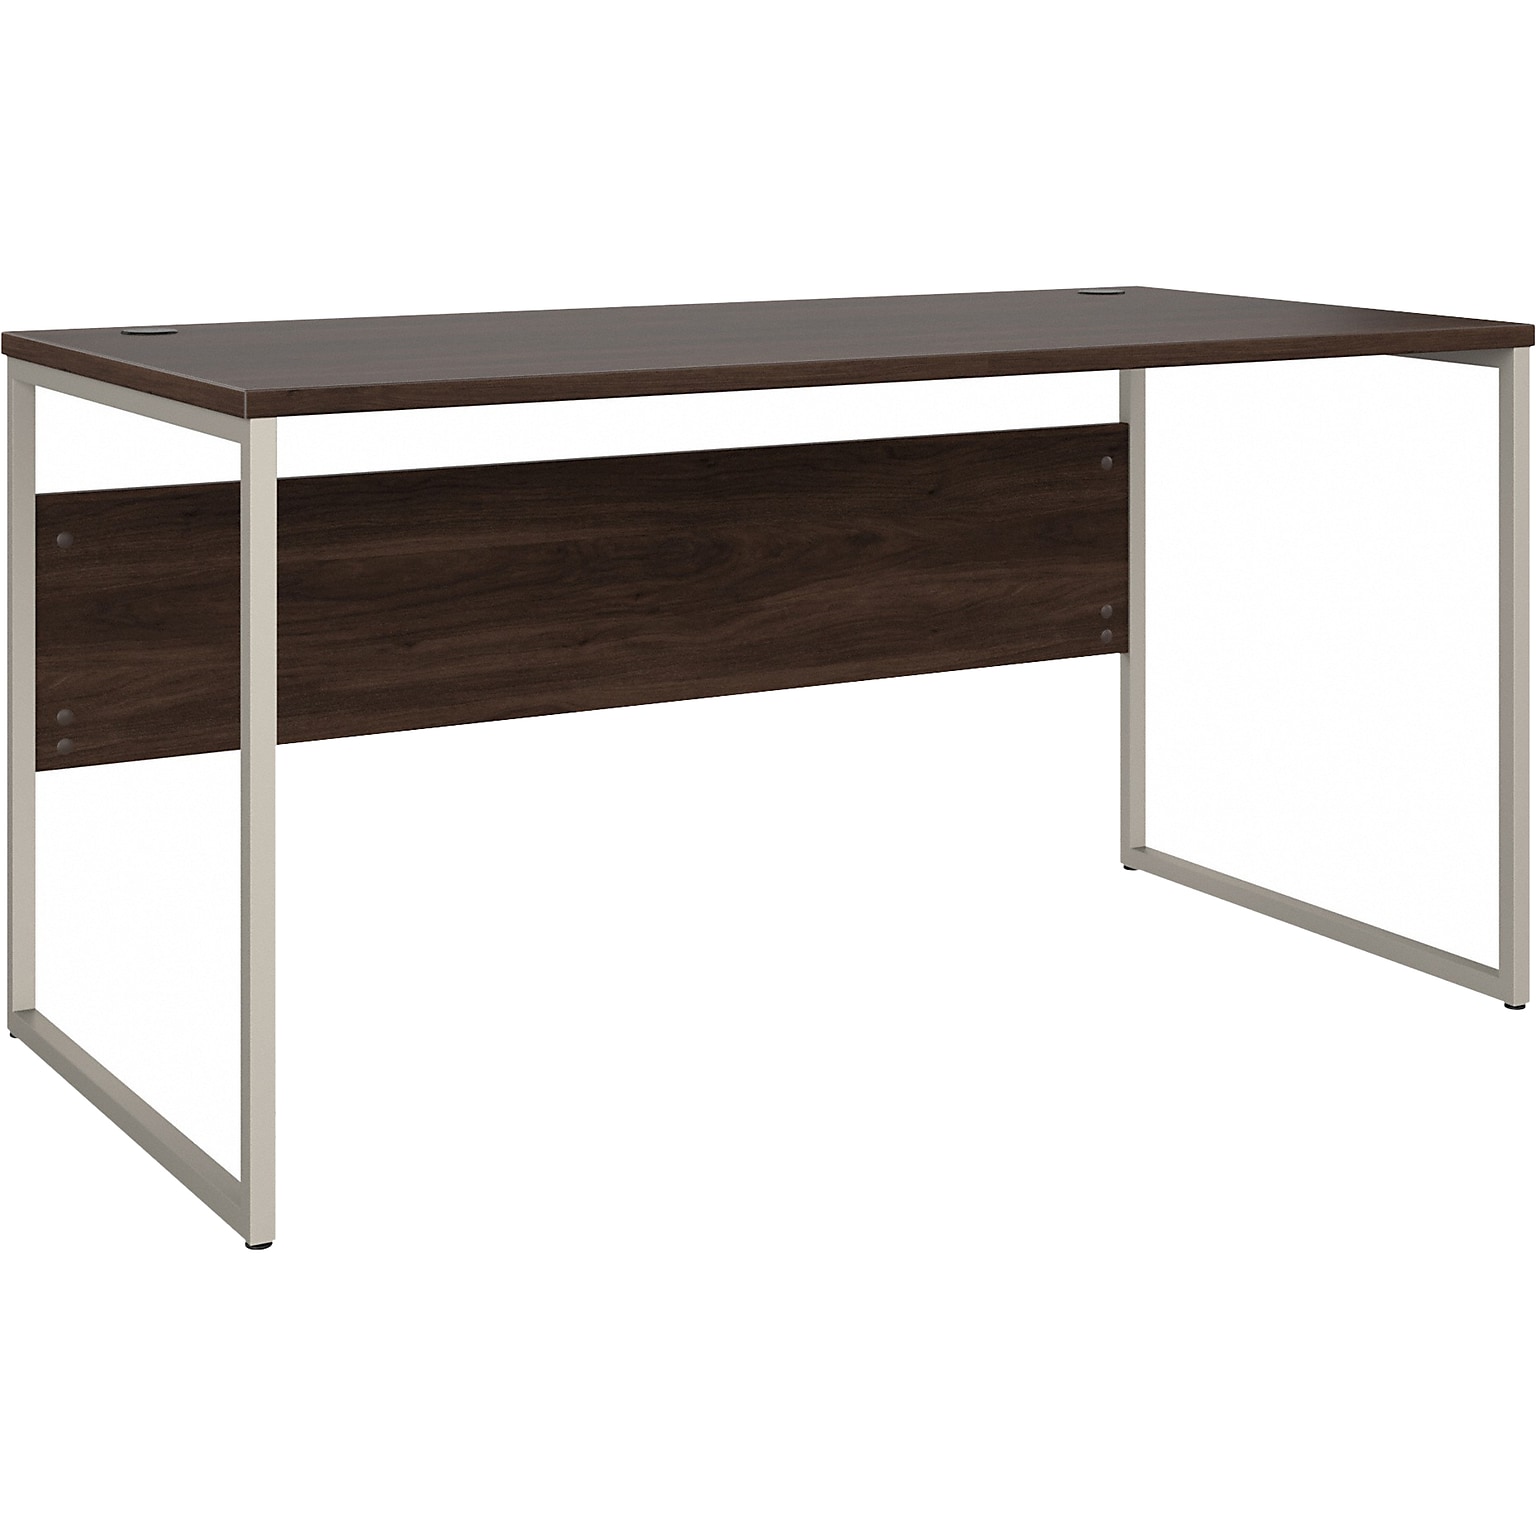 Bush Business Furniture Hybrid 60W Computer Table Desk with Metal Legs, Black Walnut (HYD360BW)